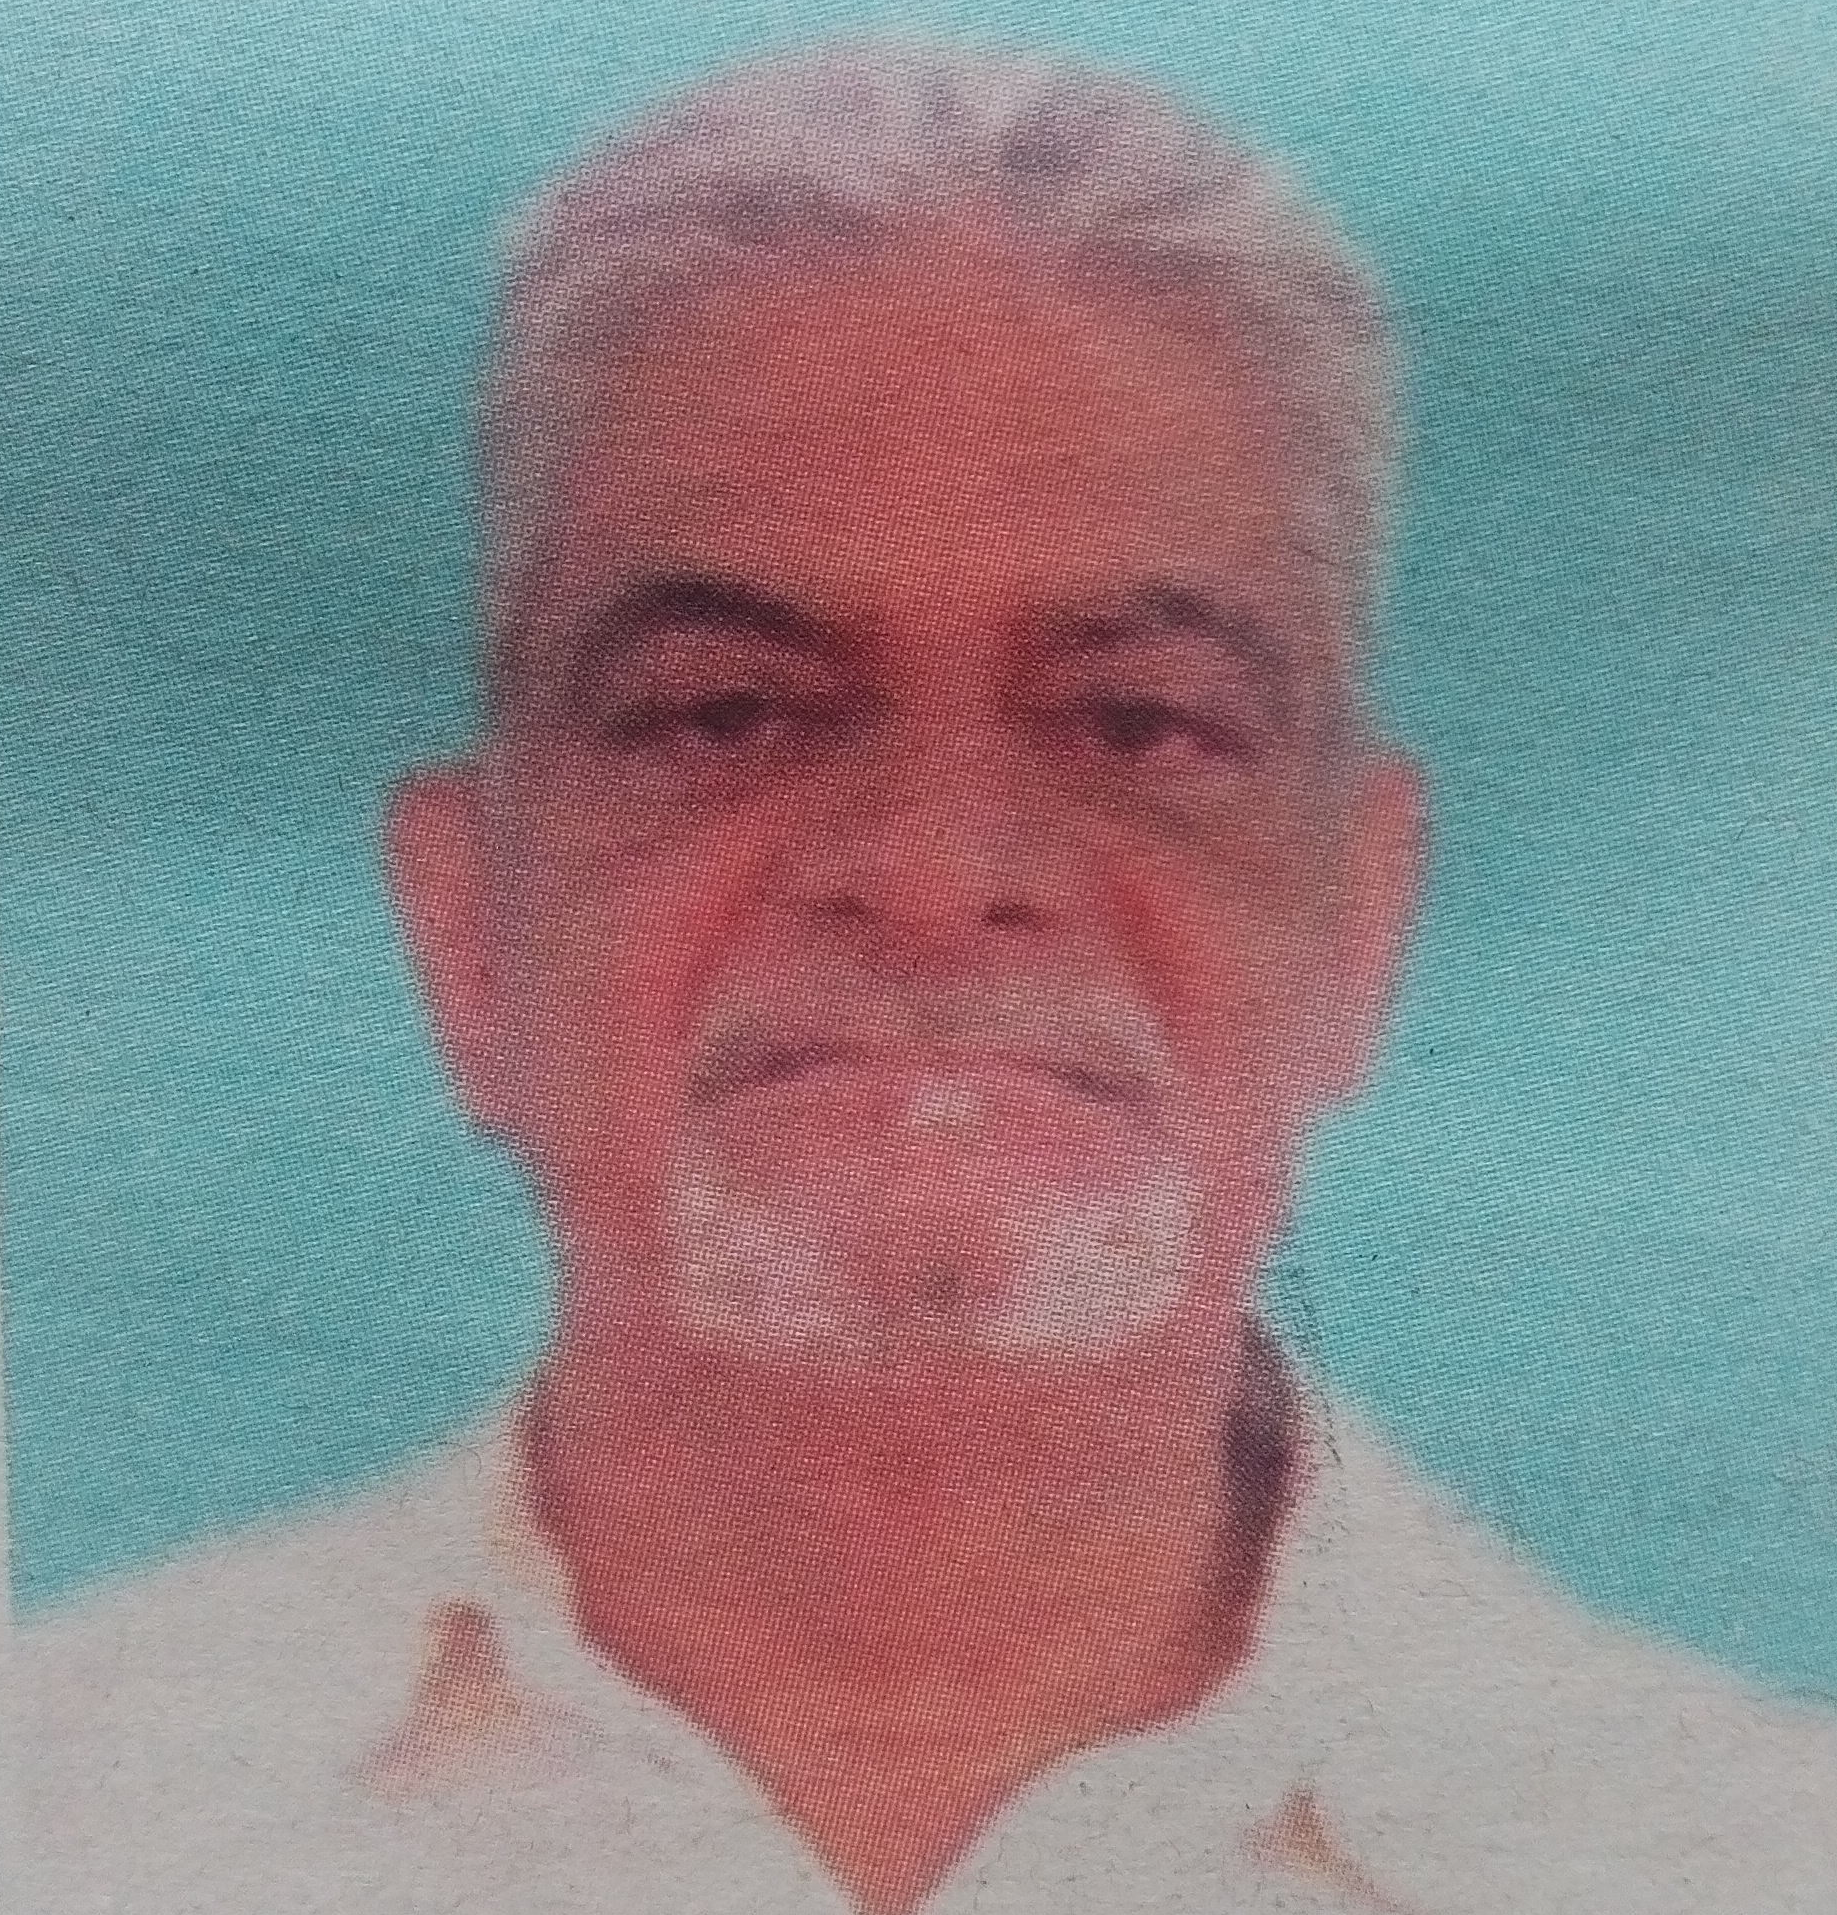 Obituary Image of Mr. Nalin Dahyabhai Patel